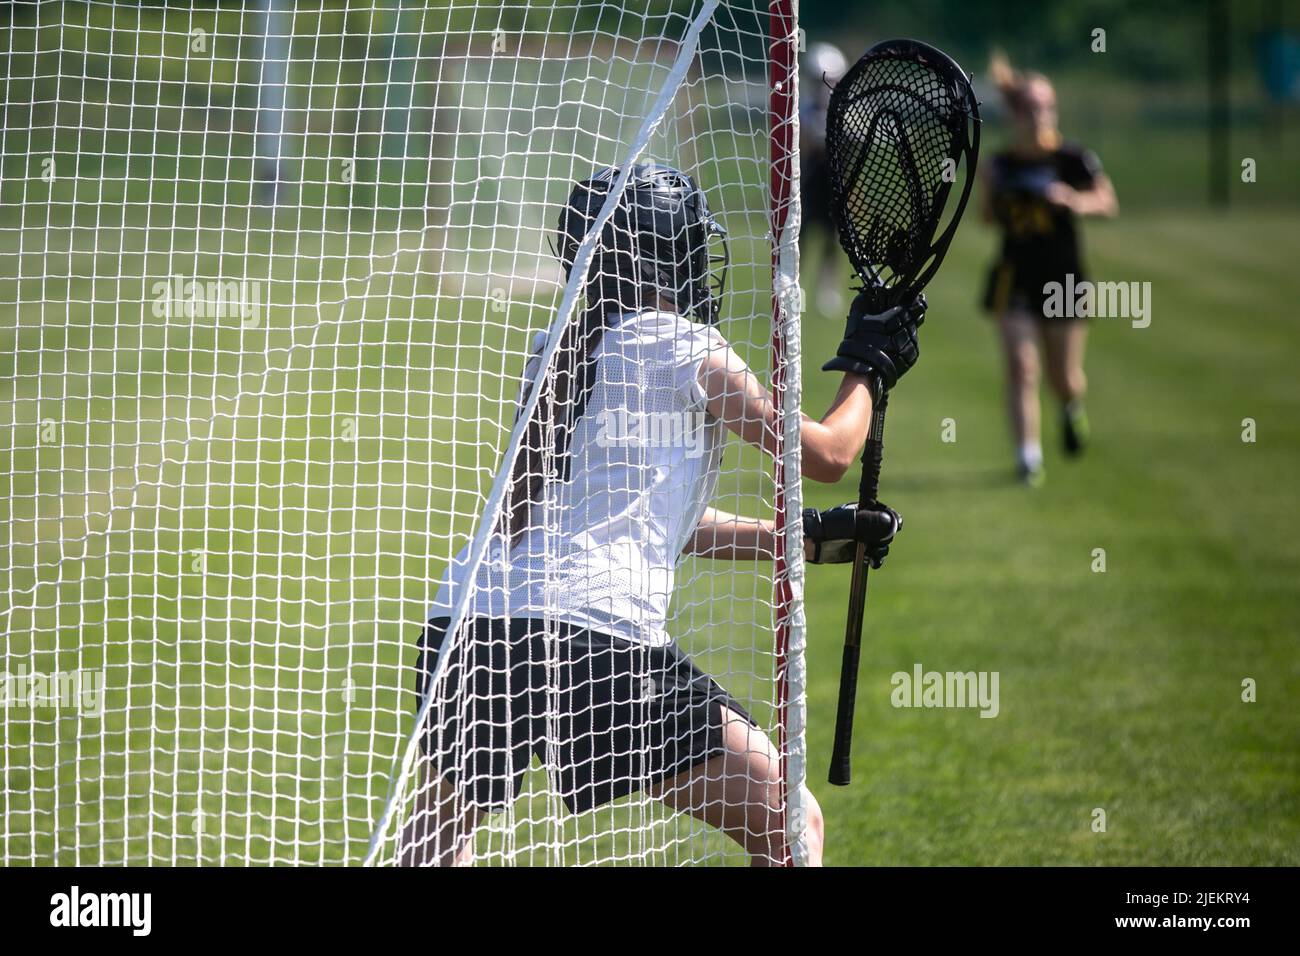 Lacrosse Themed Photo, American Sports Stock Photo